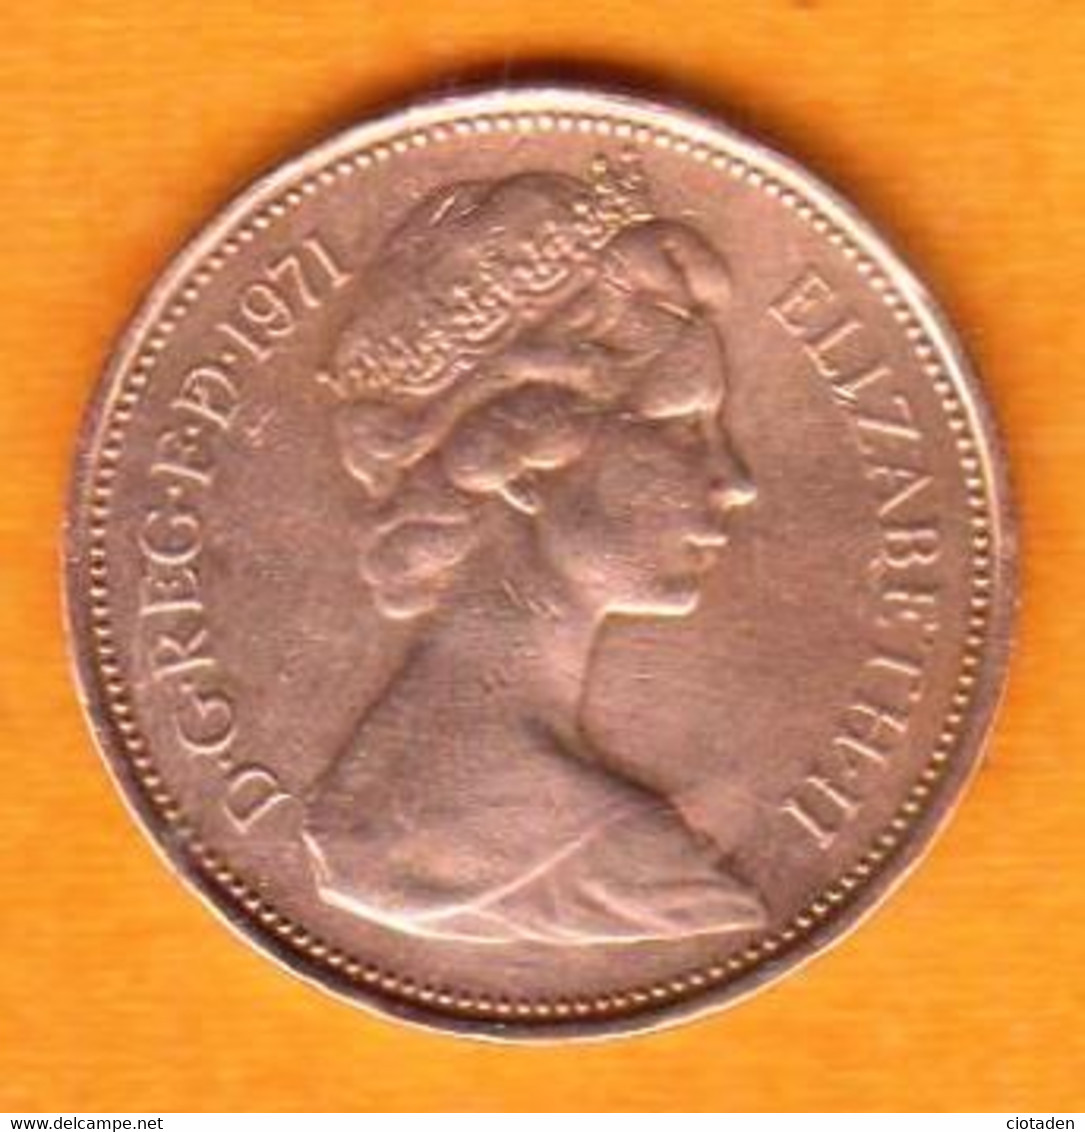 Grande Bretagne - 2 NEW PENCE - 1971 - 2 Pence & 2 New Pence